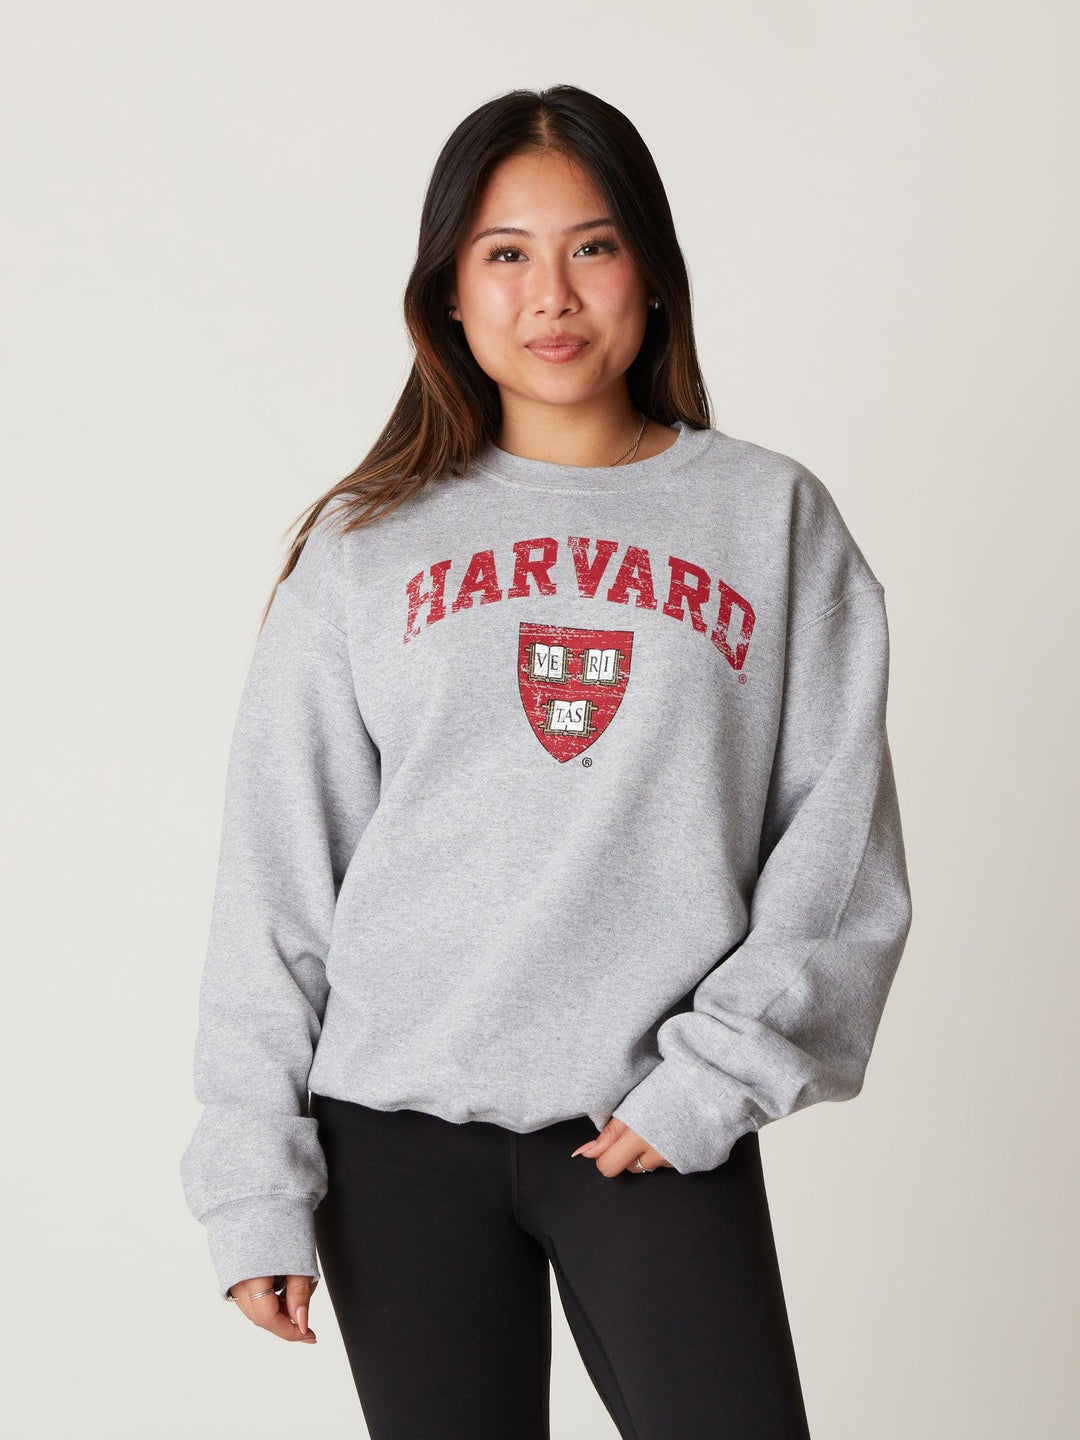 Women's Sweaters & Sweatshirts – The Harvard Shop